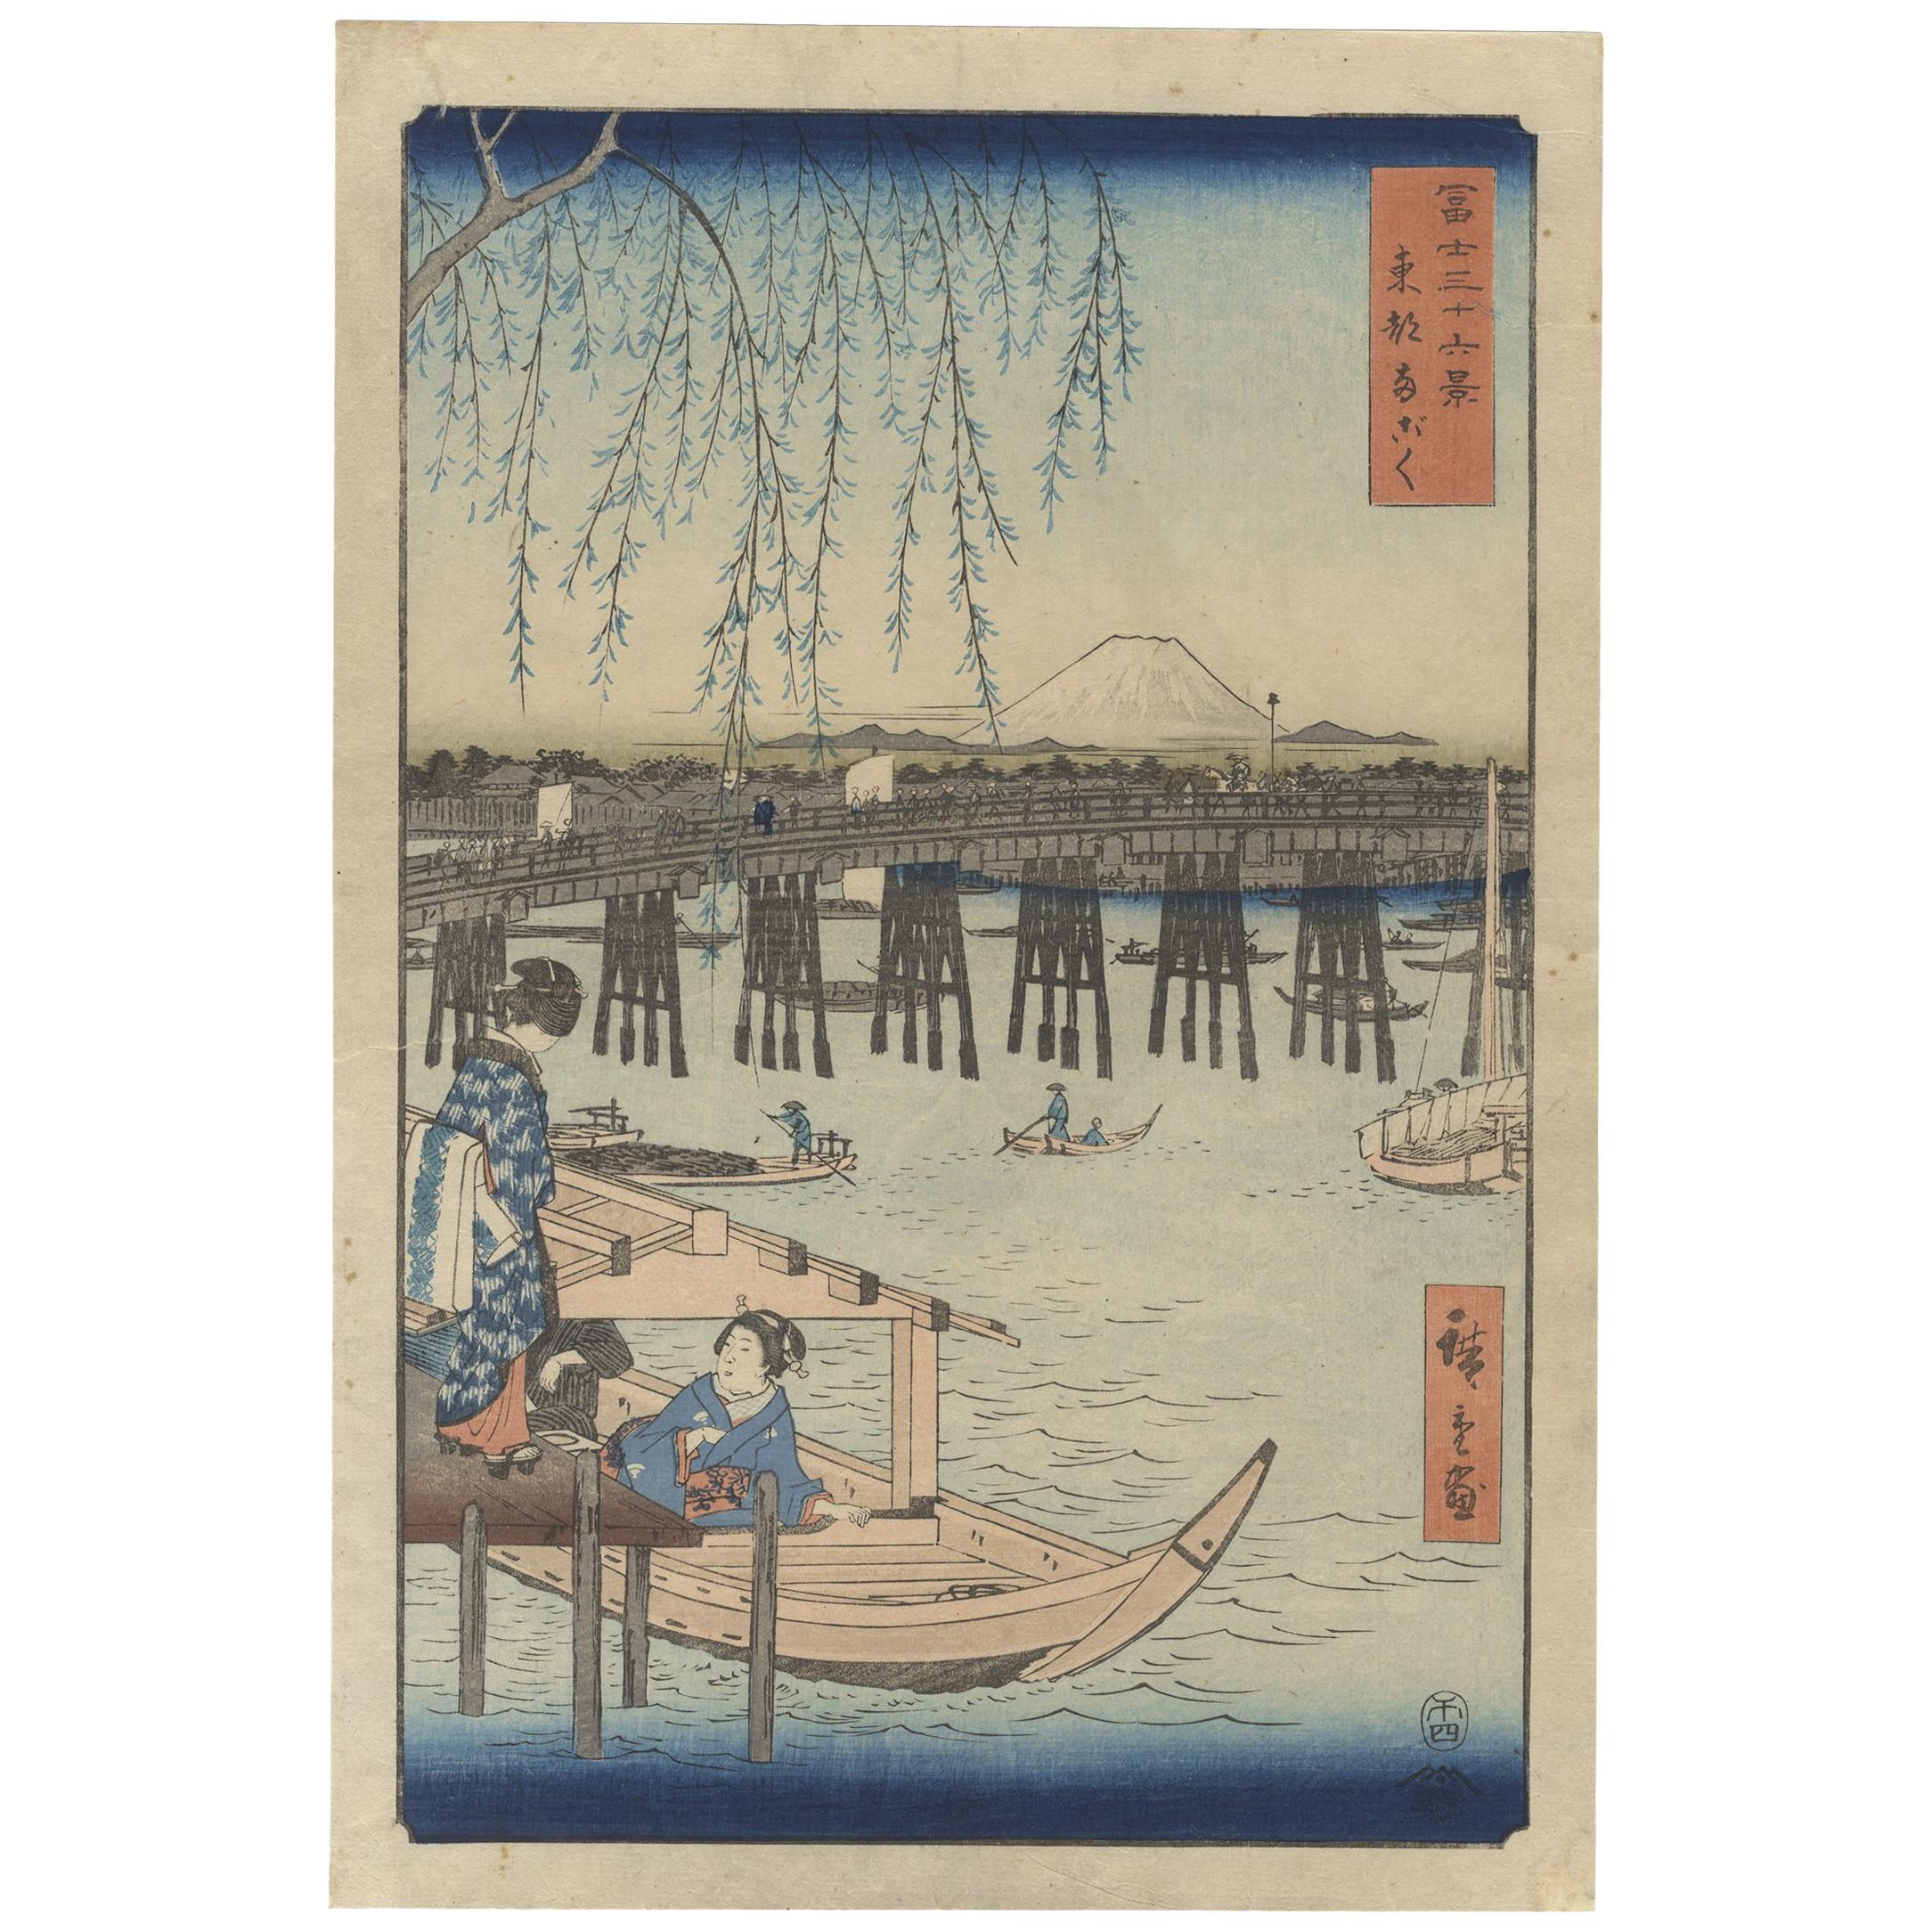 Ando Hiroshige, 36 Views of Mt. Fuji, Original Japanese Woodblock Print, River